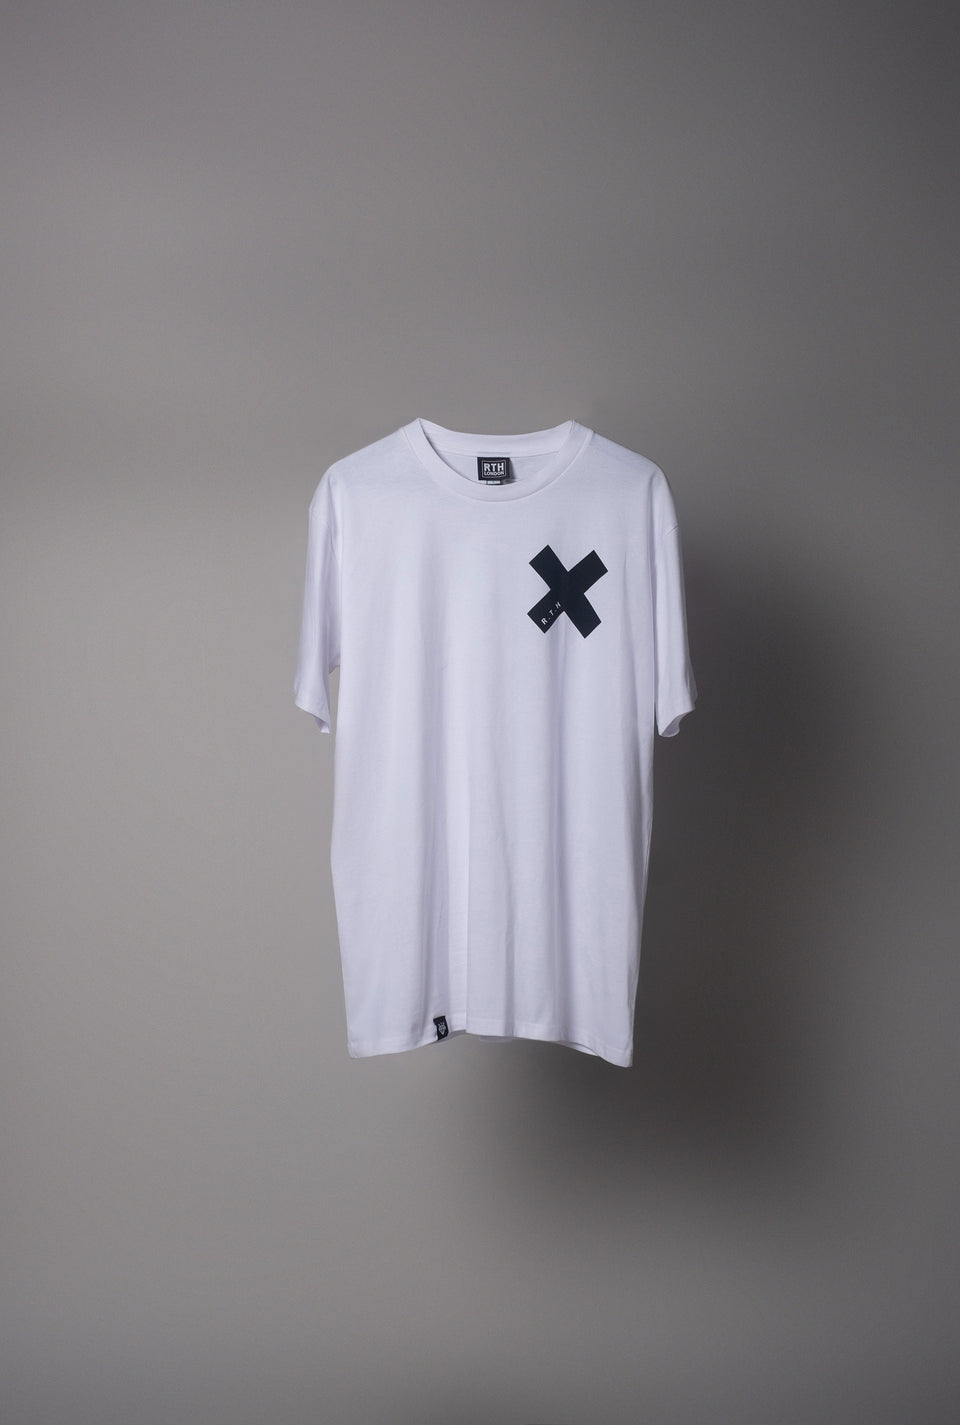 RTH 'X' T-shirt - White